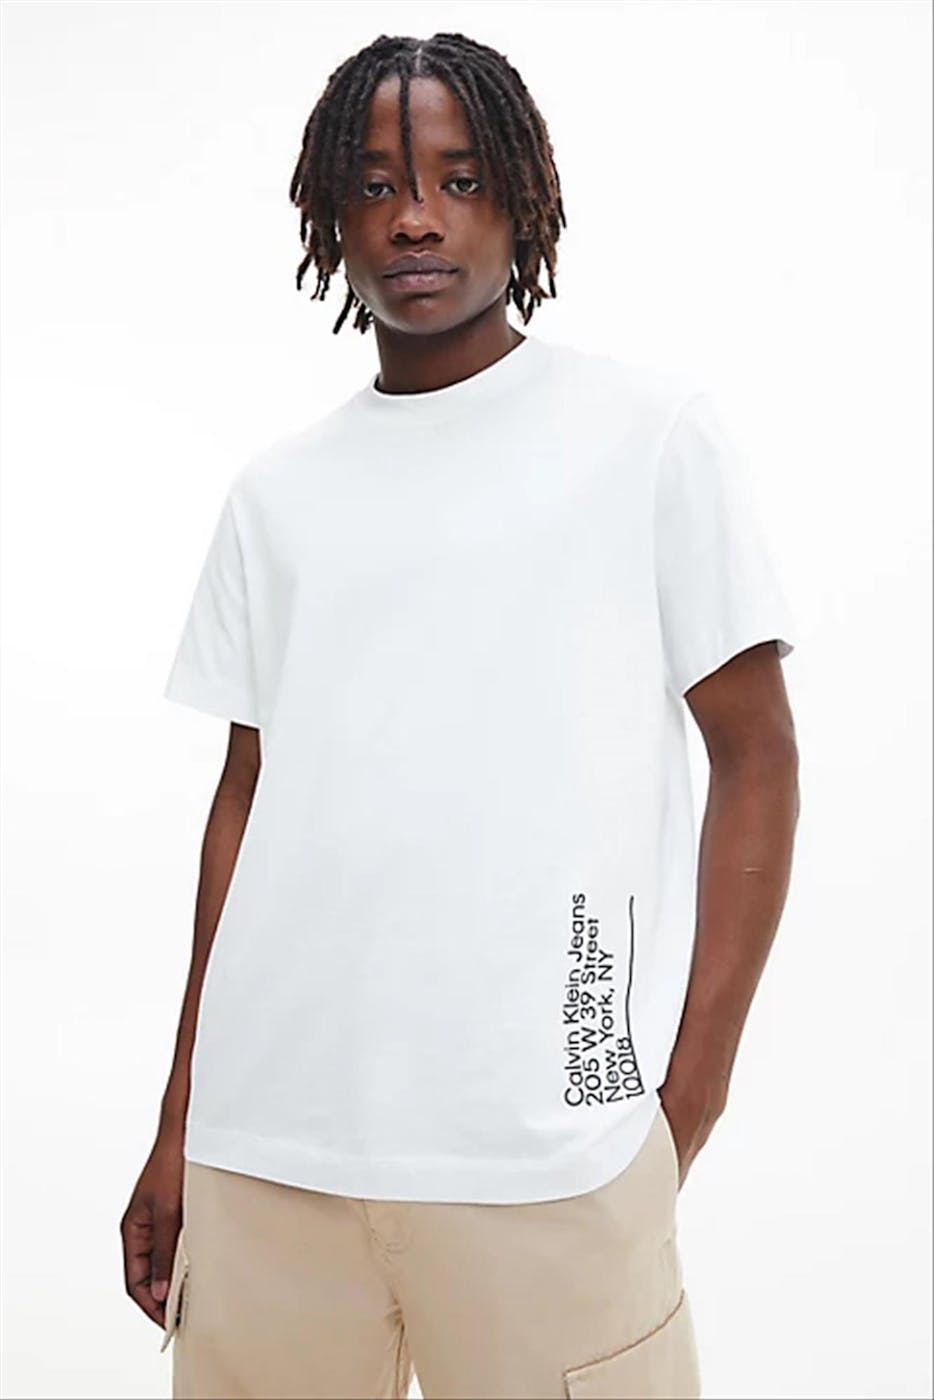 Calvin Klein Jeans - Witte Adreslogo Fotoprint T-shirt